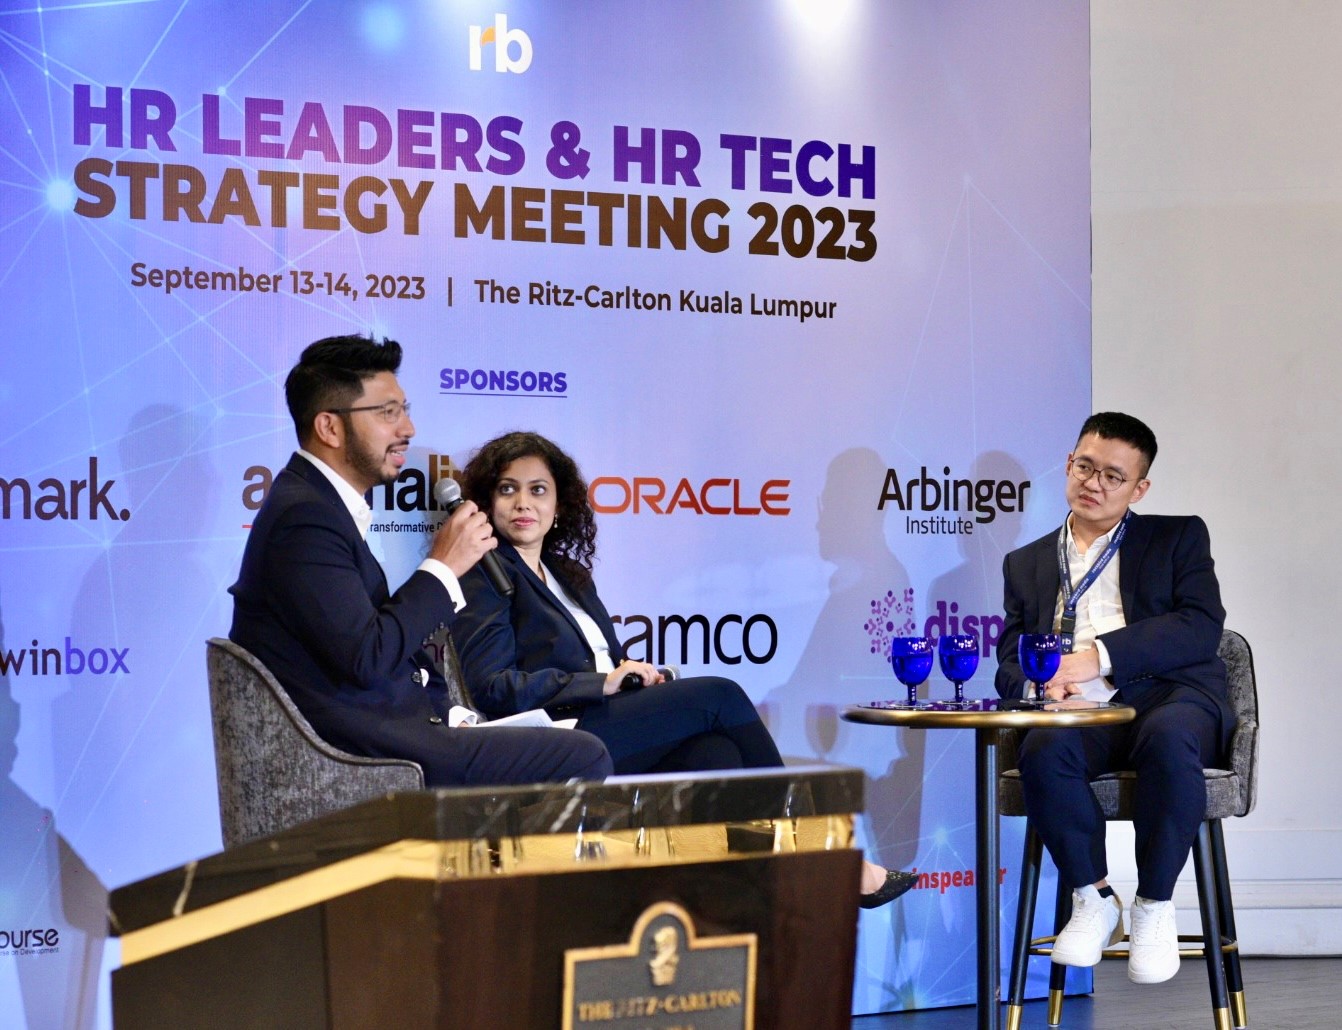 HR Leaders & HR Tech Strategy Meeting 2023